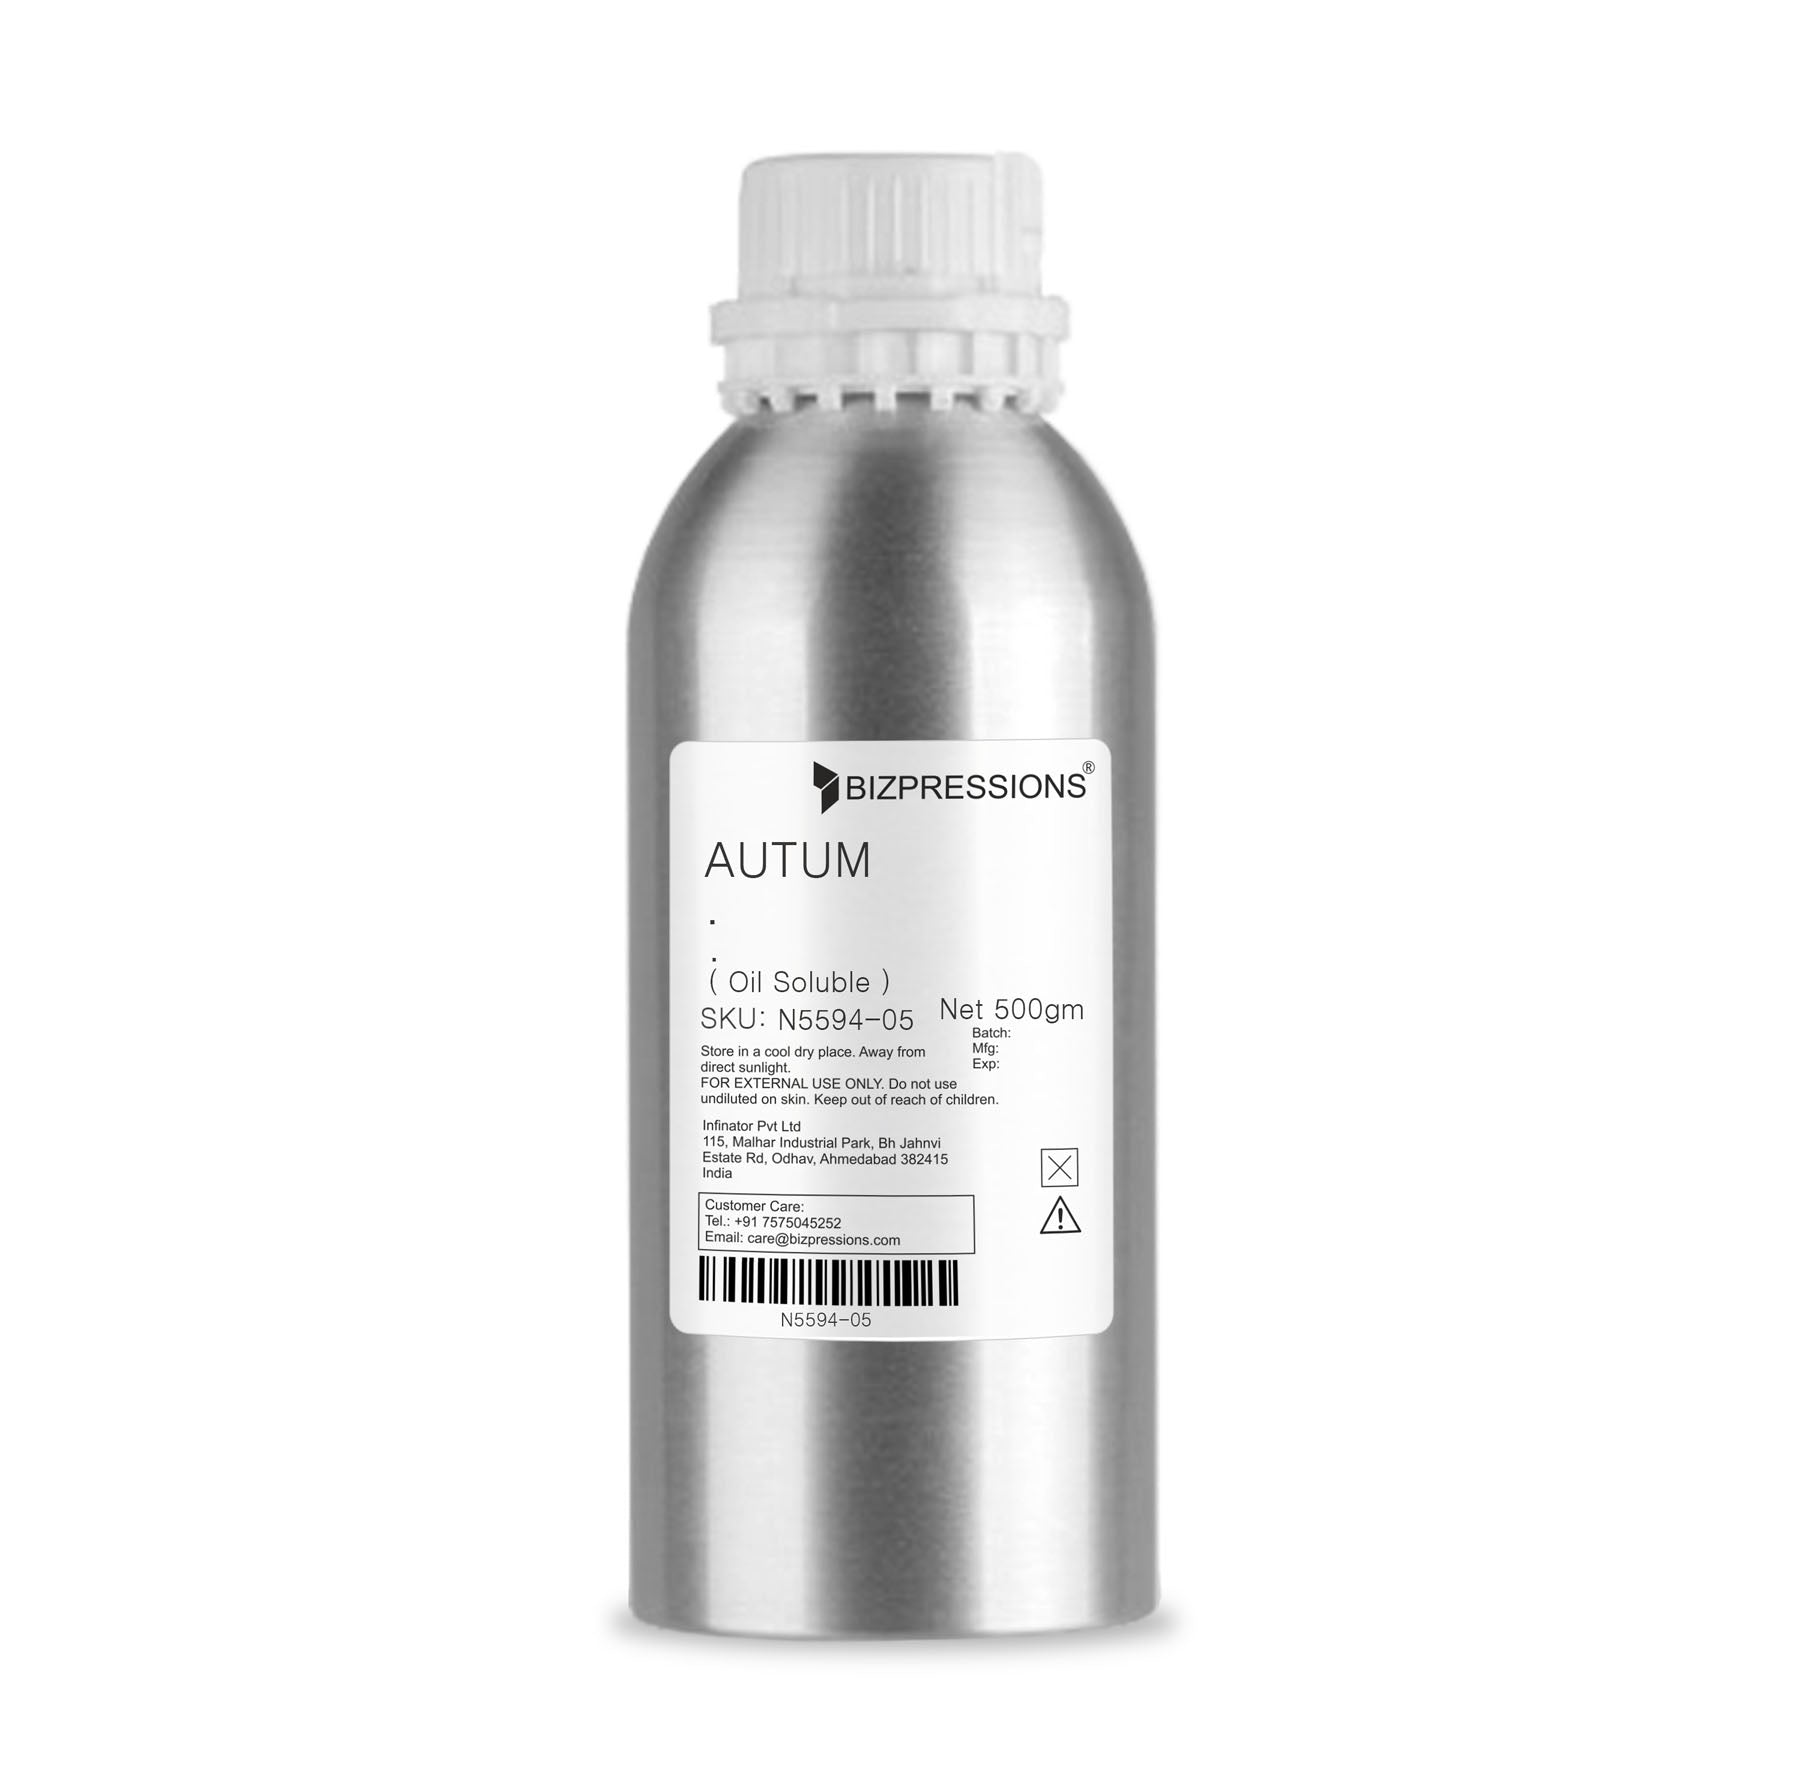 AUTUM - Fragrance ( Oil Soluble ) - 500 gm